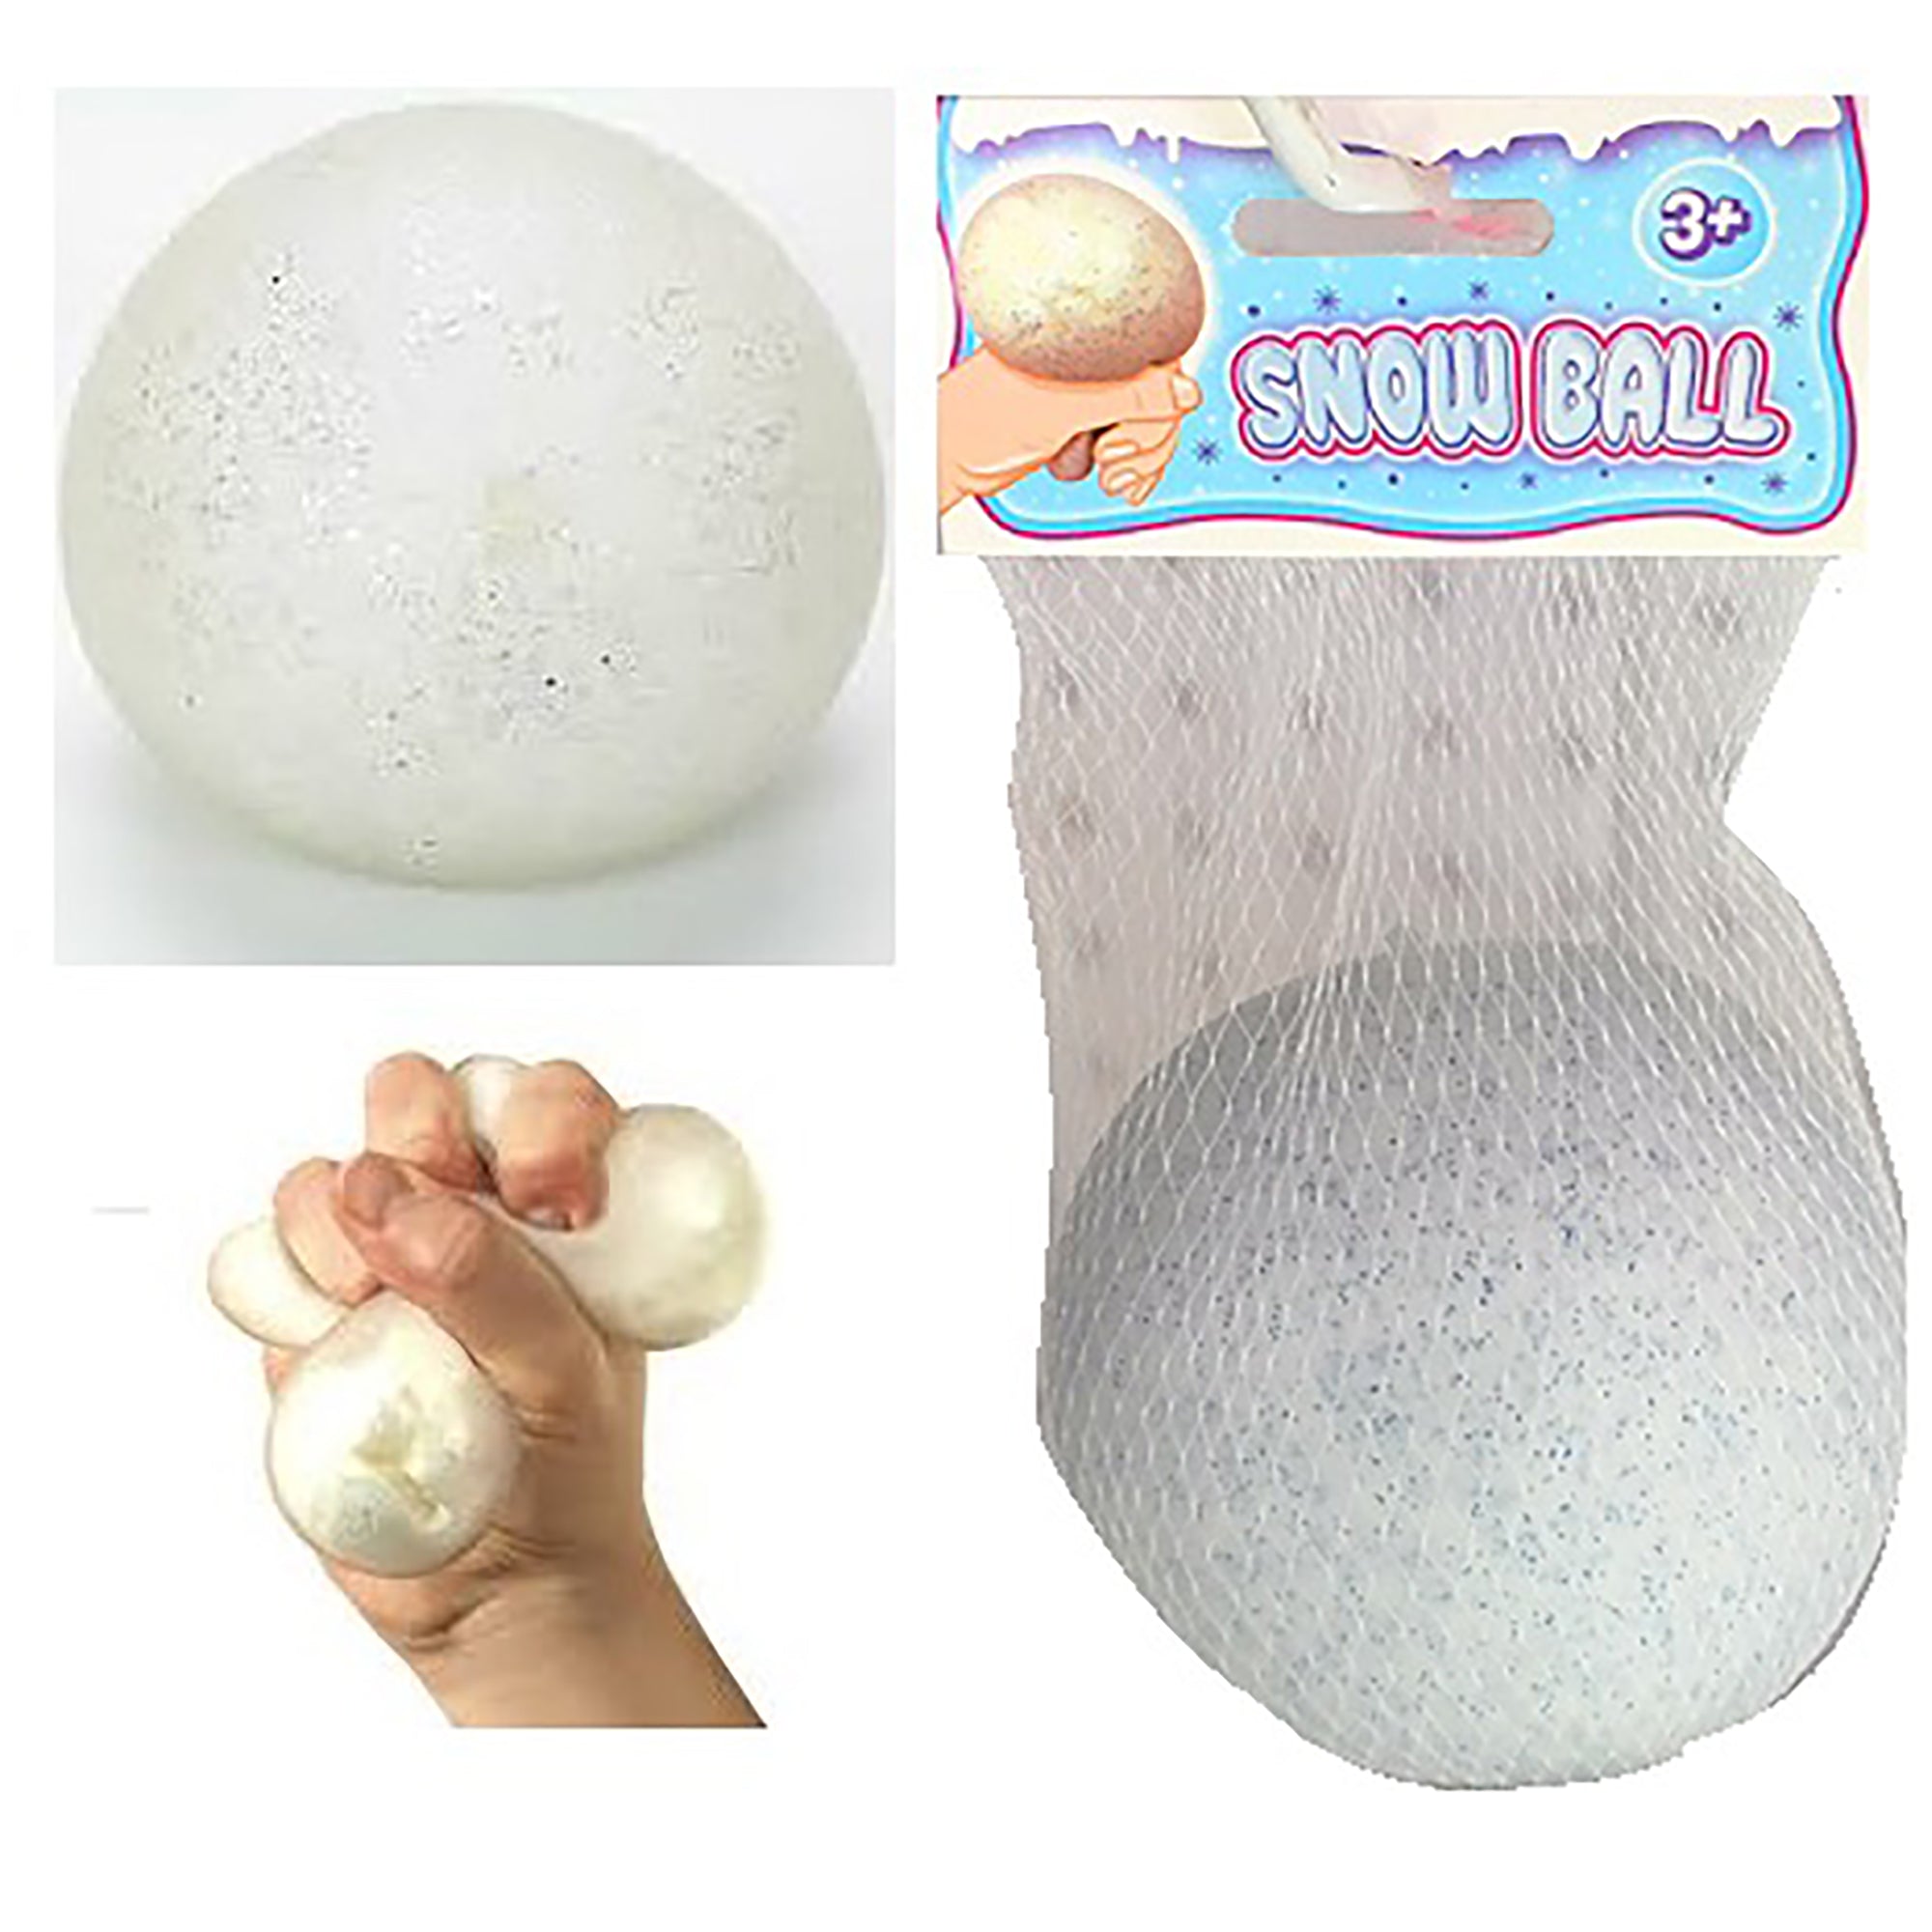 Squishable Snow Ball 4in dia.  3+